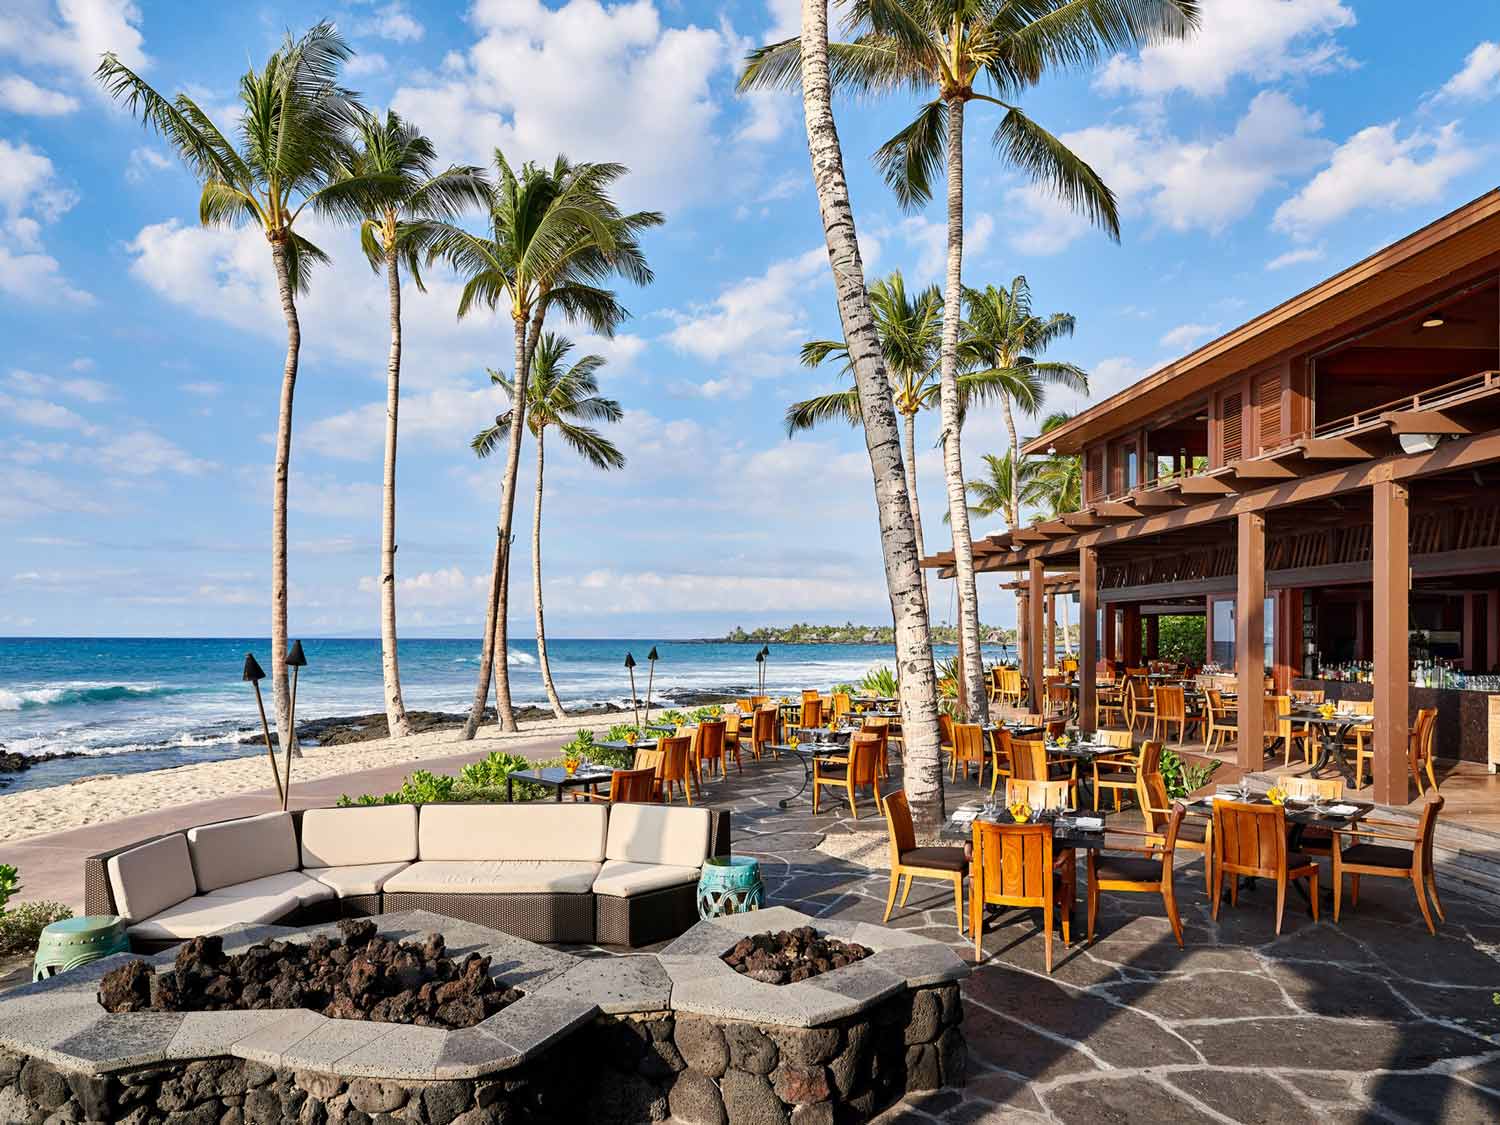 Beachfront dining at ‘Ulu Ocean Grill at Four Seasons Resort Hualalai